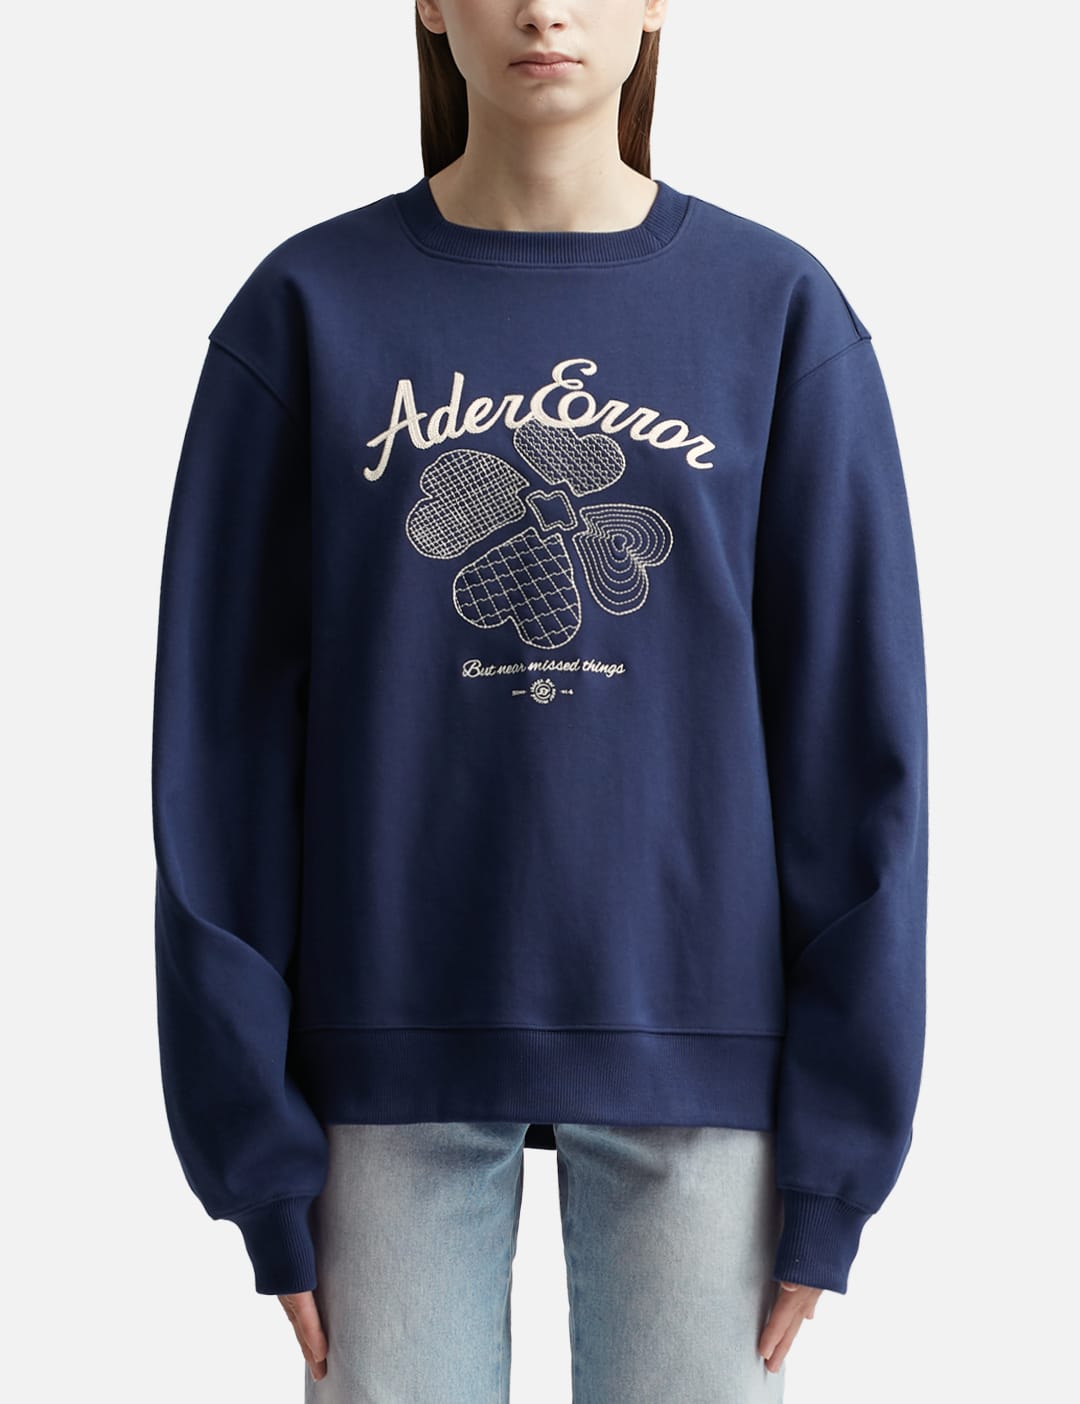 Ader Error - Tever Logo Sweatshirt | HBX - Globally Curated